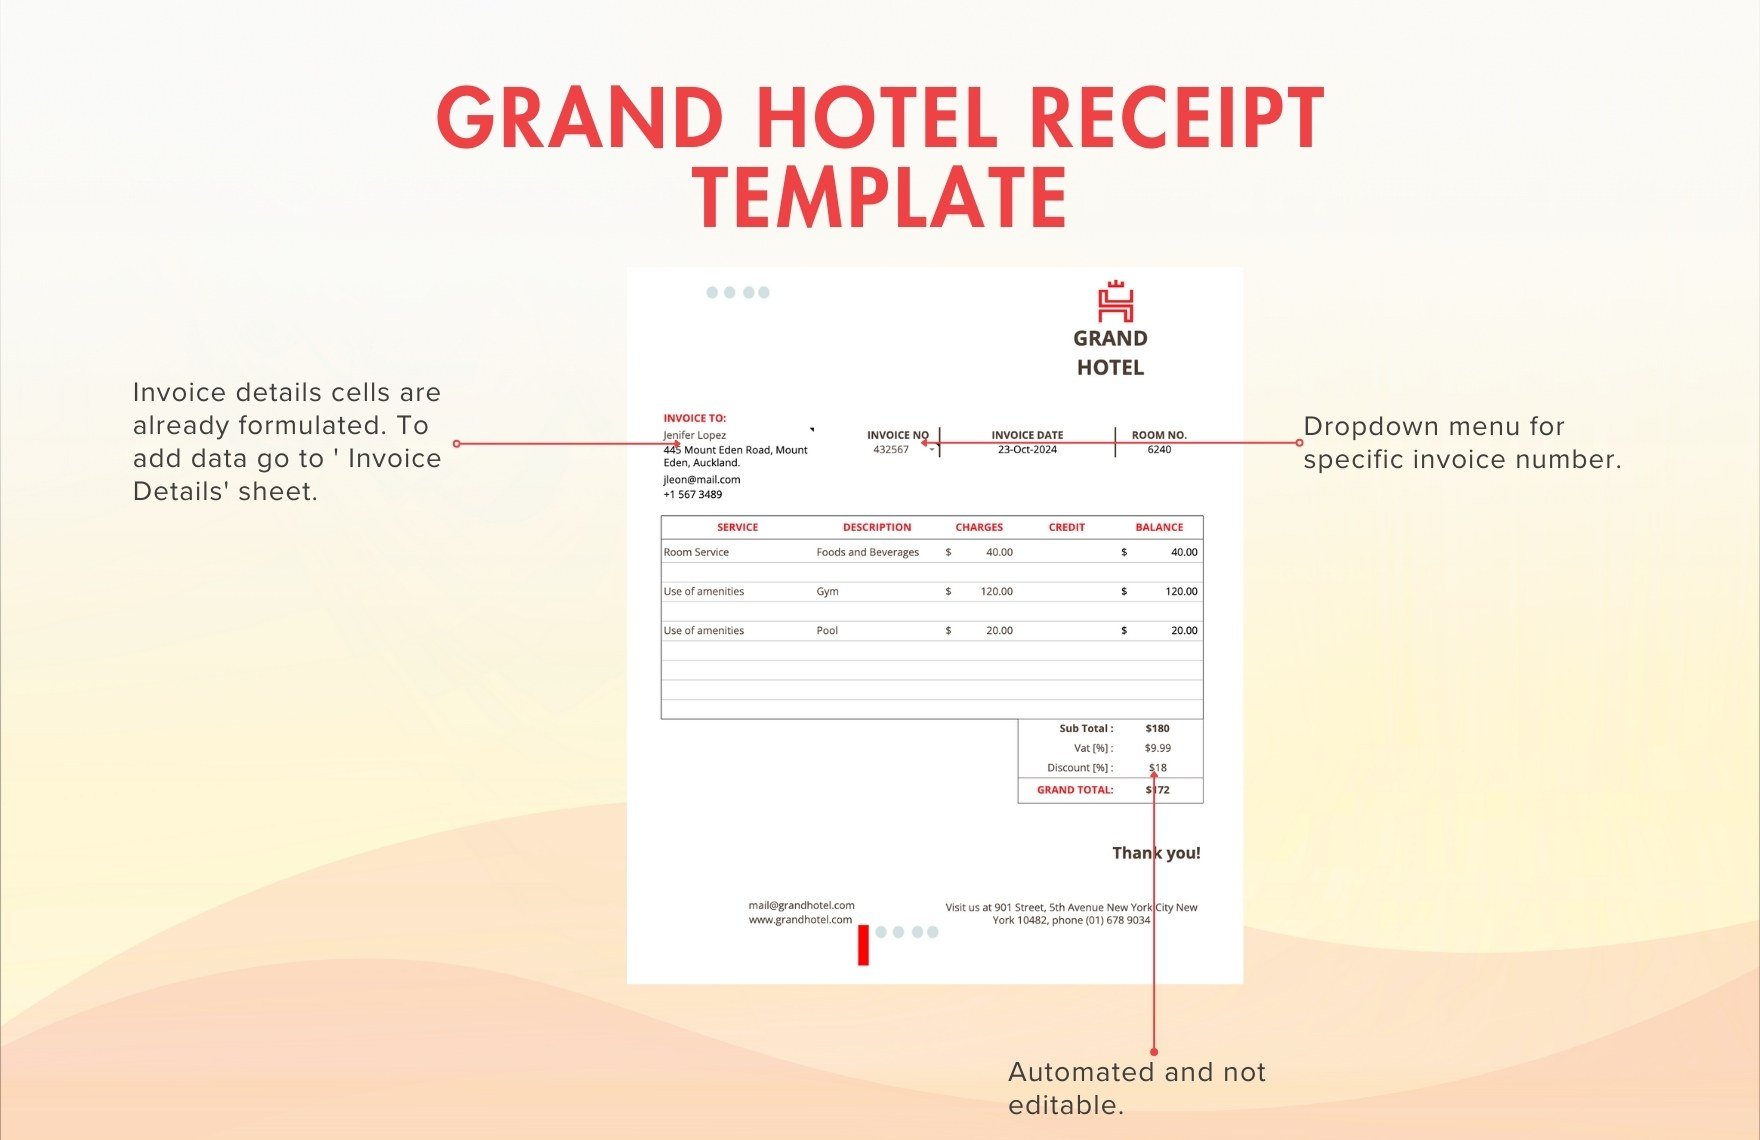 Grand Hotel Receipt Template